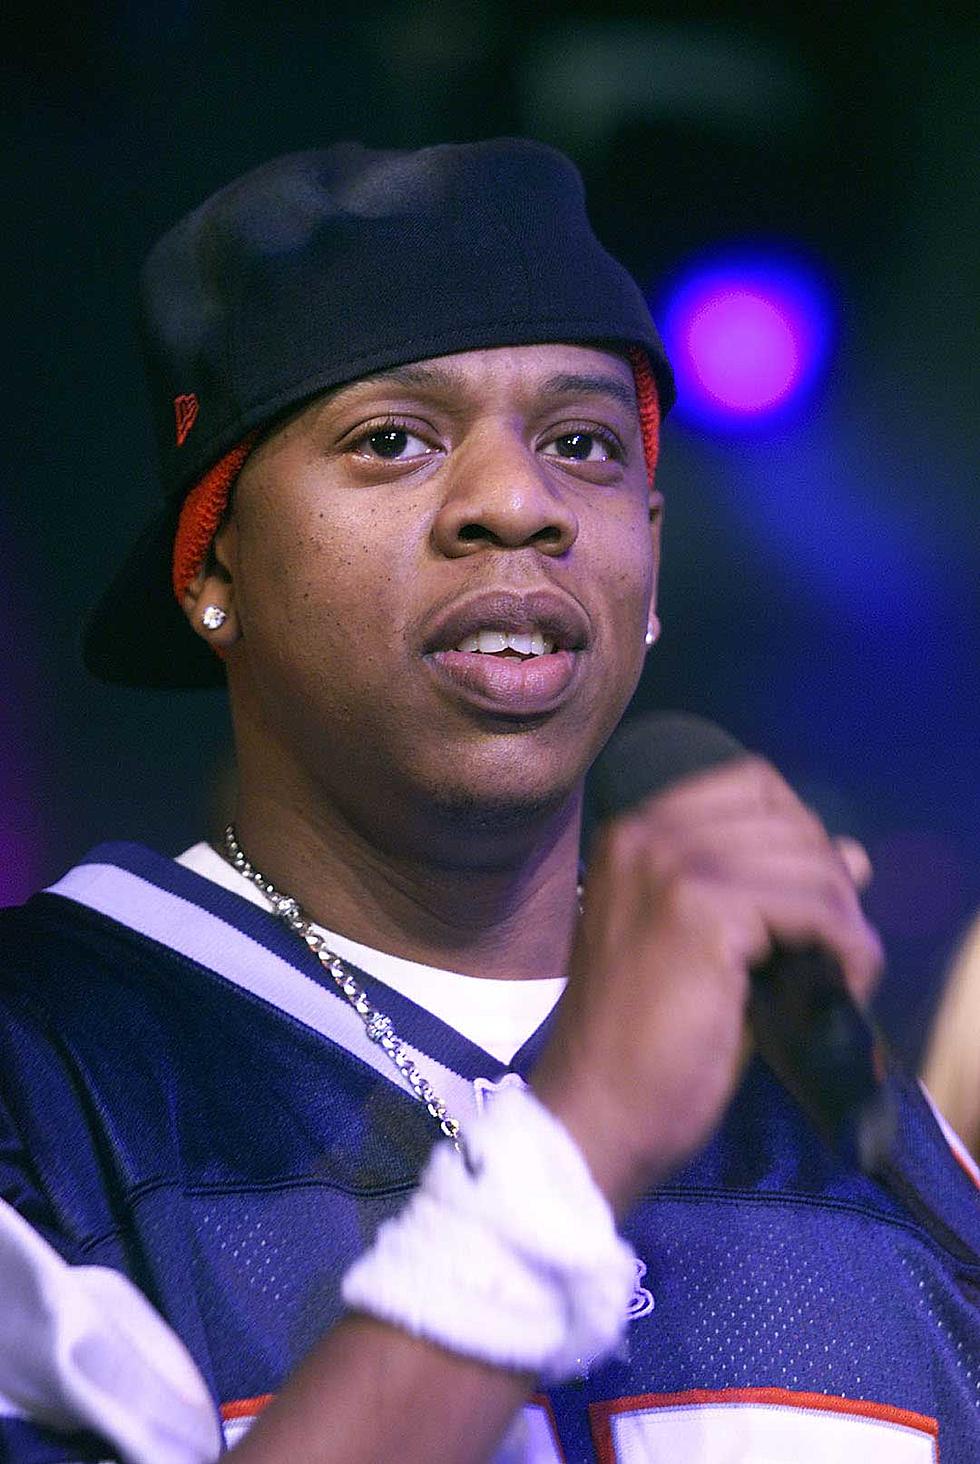 Judge Dismisses Lawsuit Over Jay Z's "Big Pimpin"